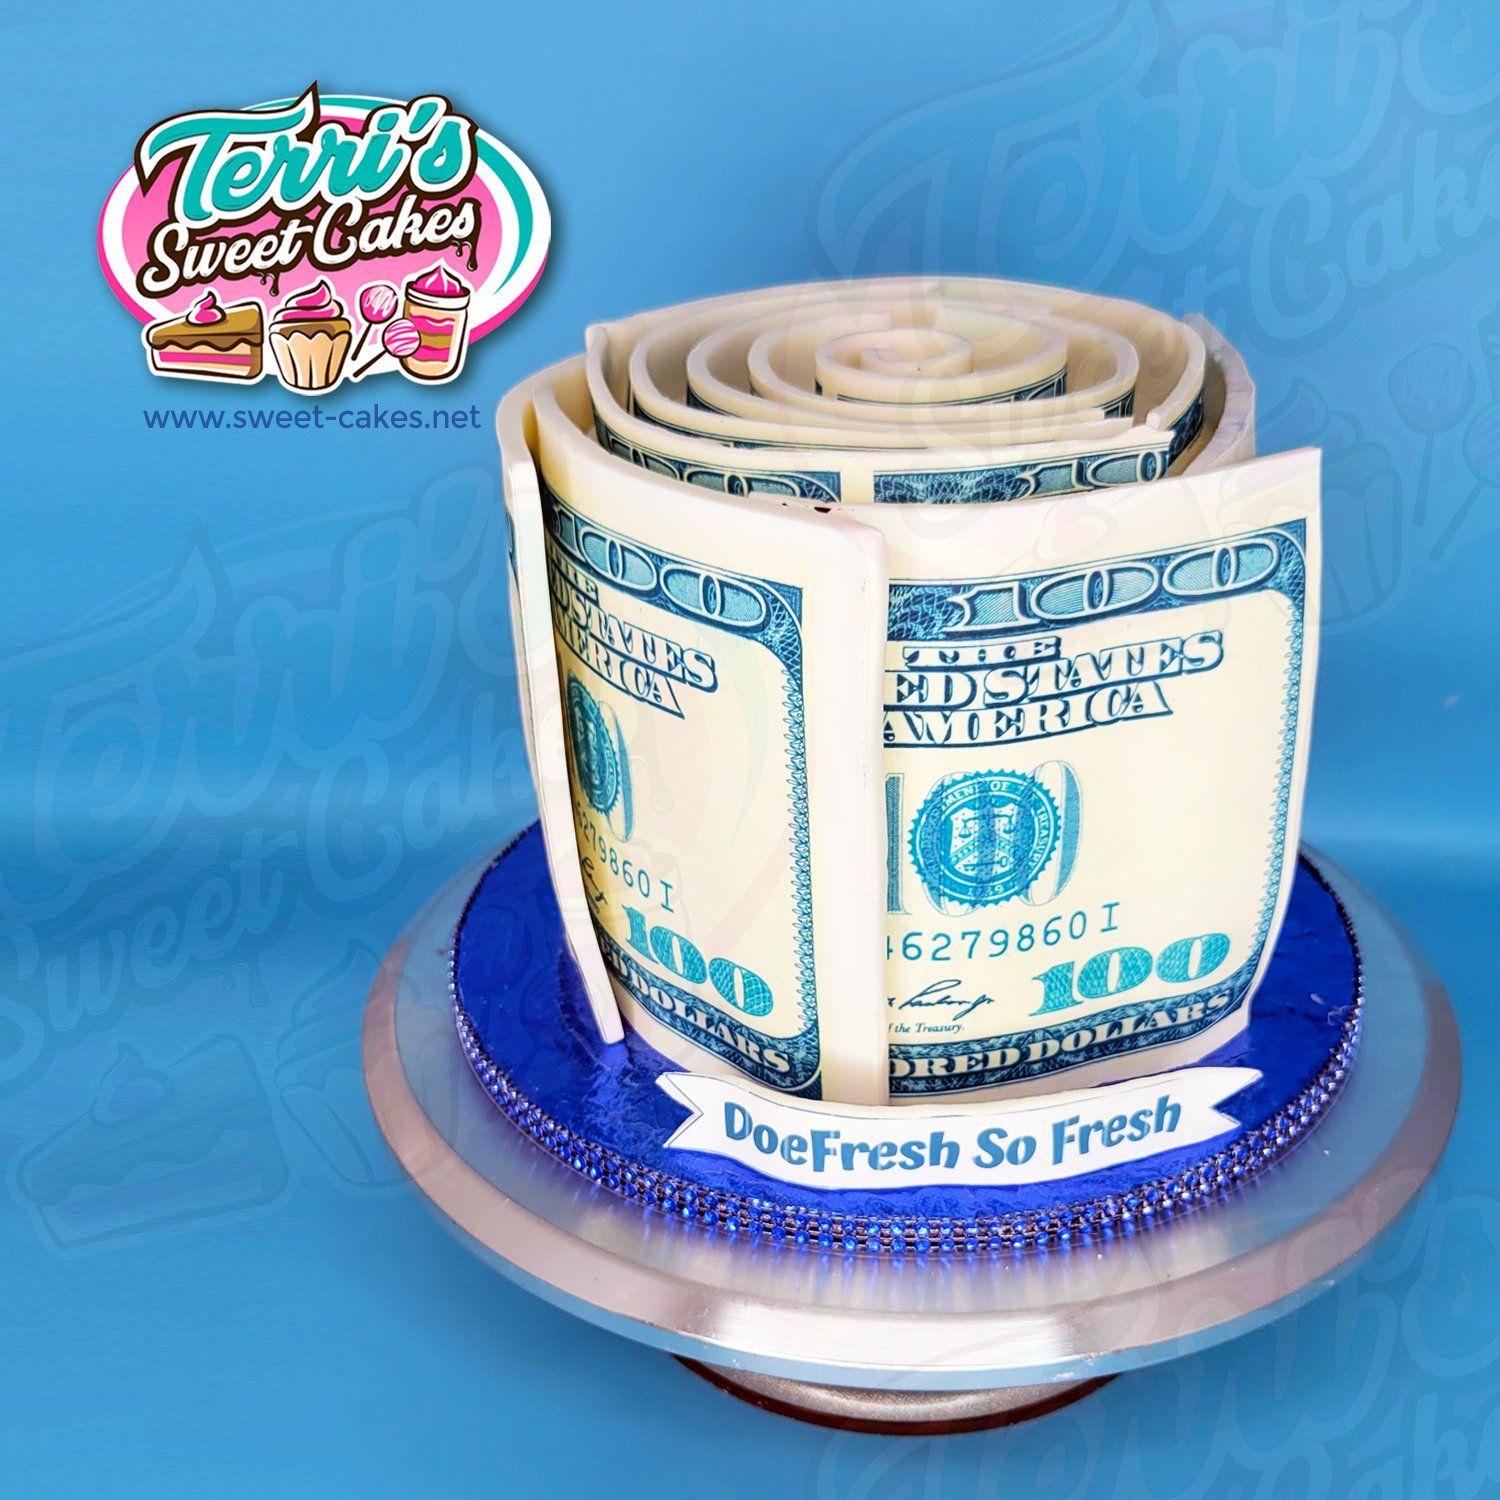 Bankroll Money Birthday Cake by Terri's Sweet Cakes